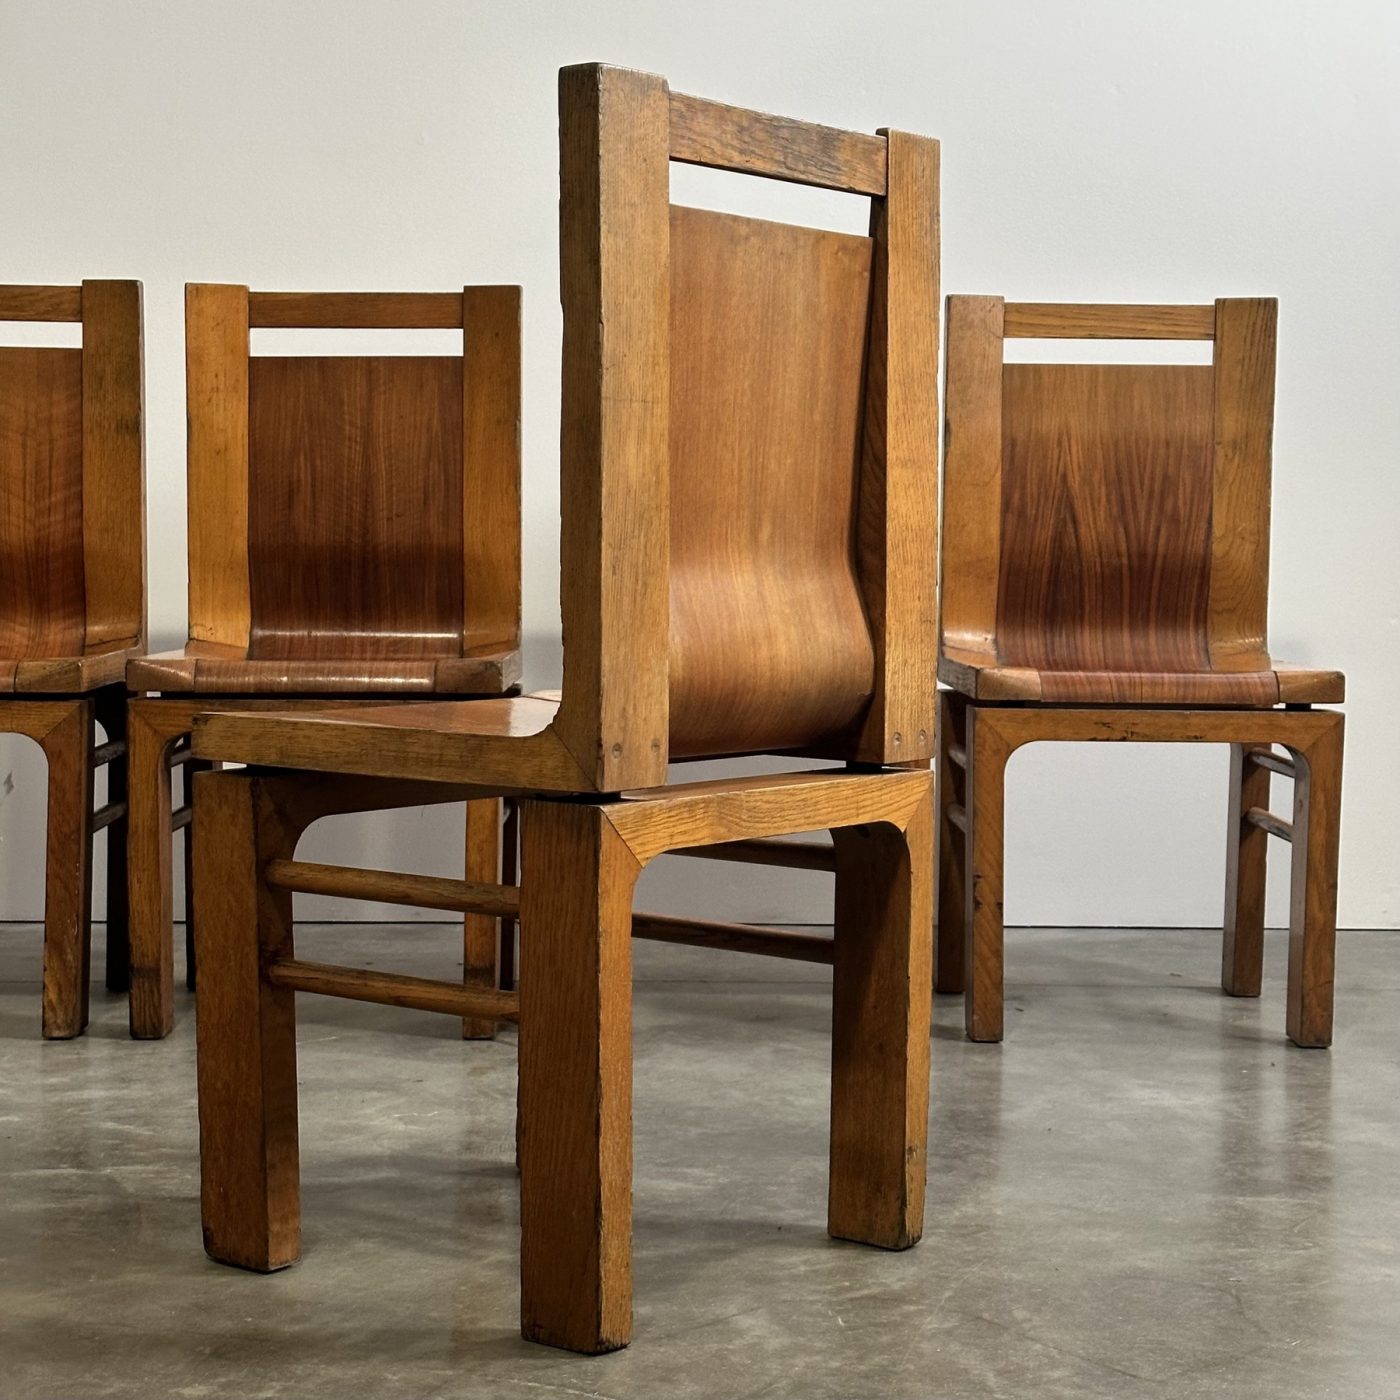 objet-vagabond-brutalist-chairs0008